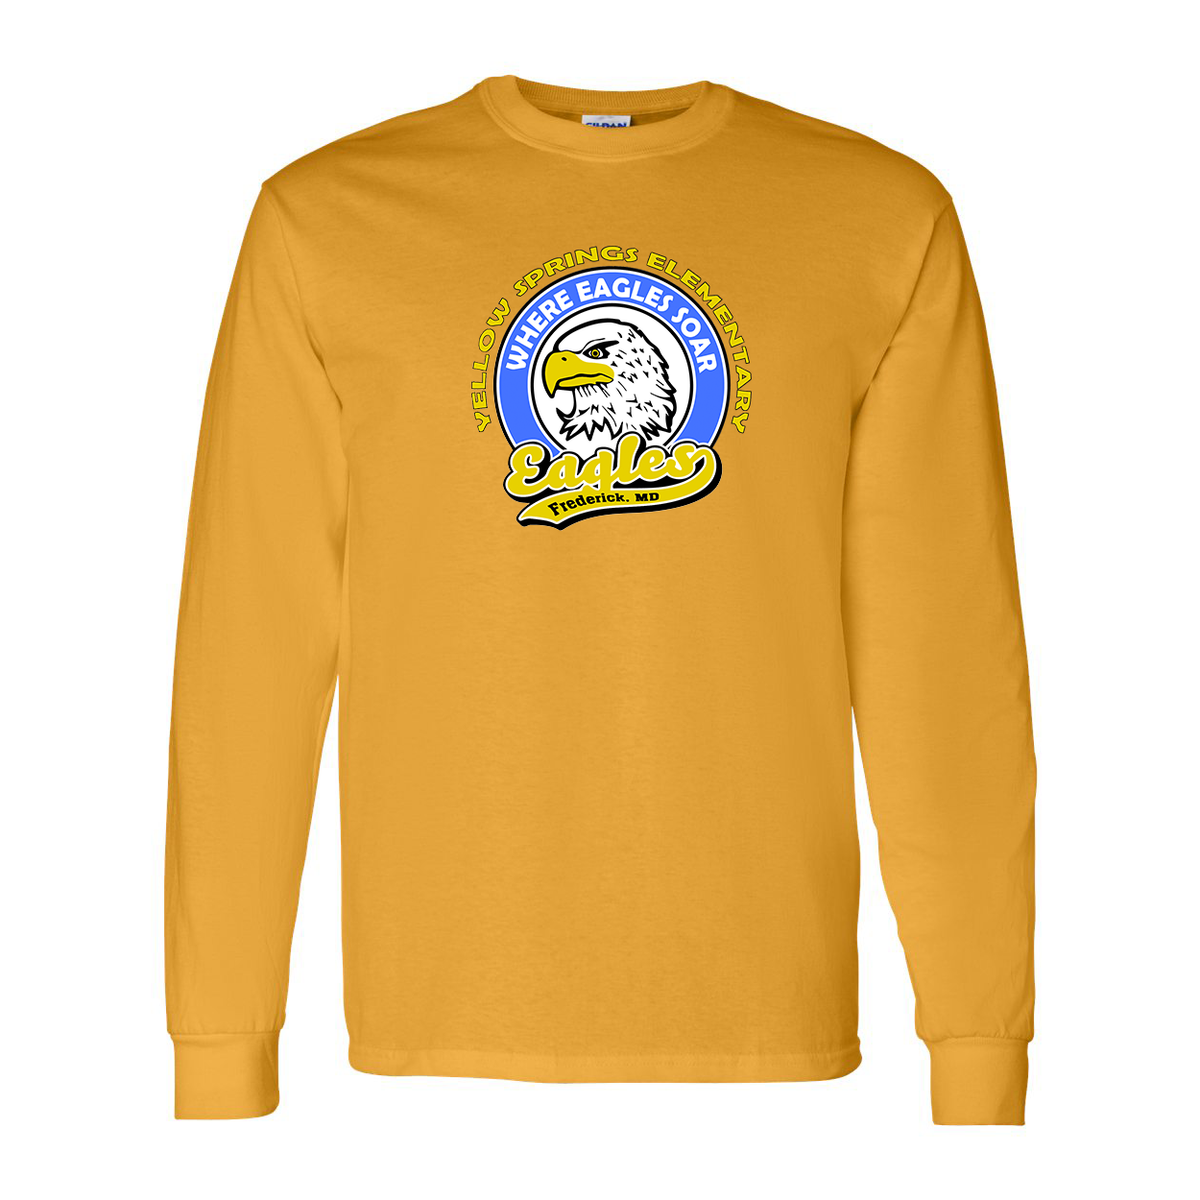 Yellow Springs Elementary School Gildan Ultra Cotton Long Sleeve Shirt